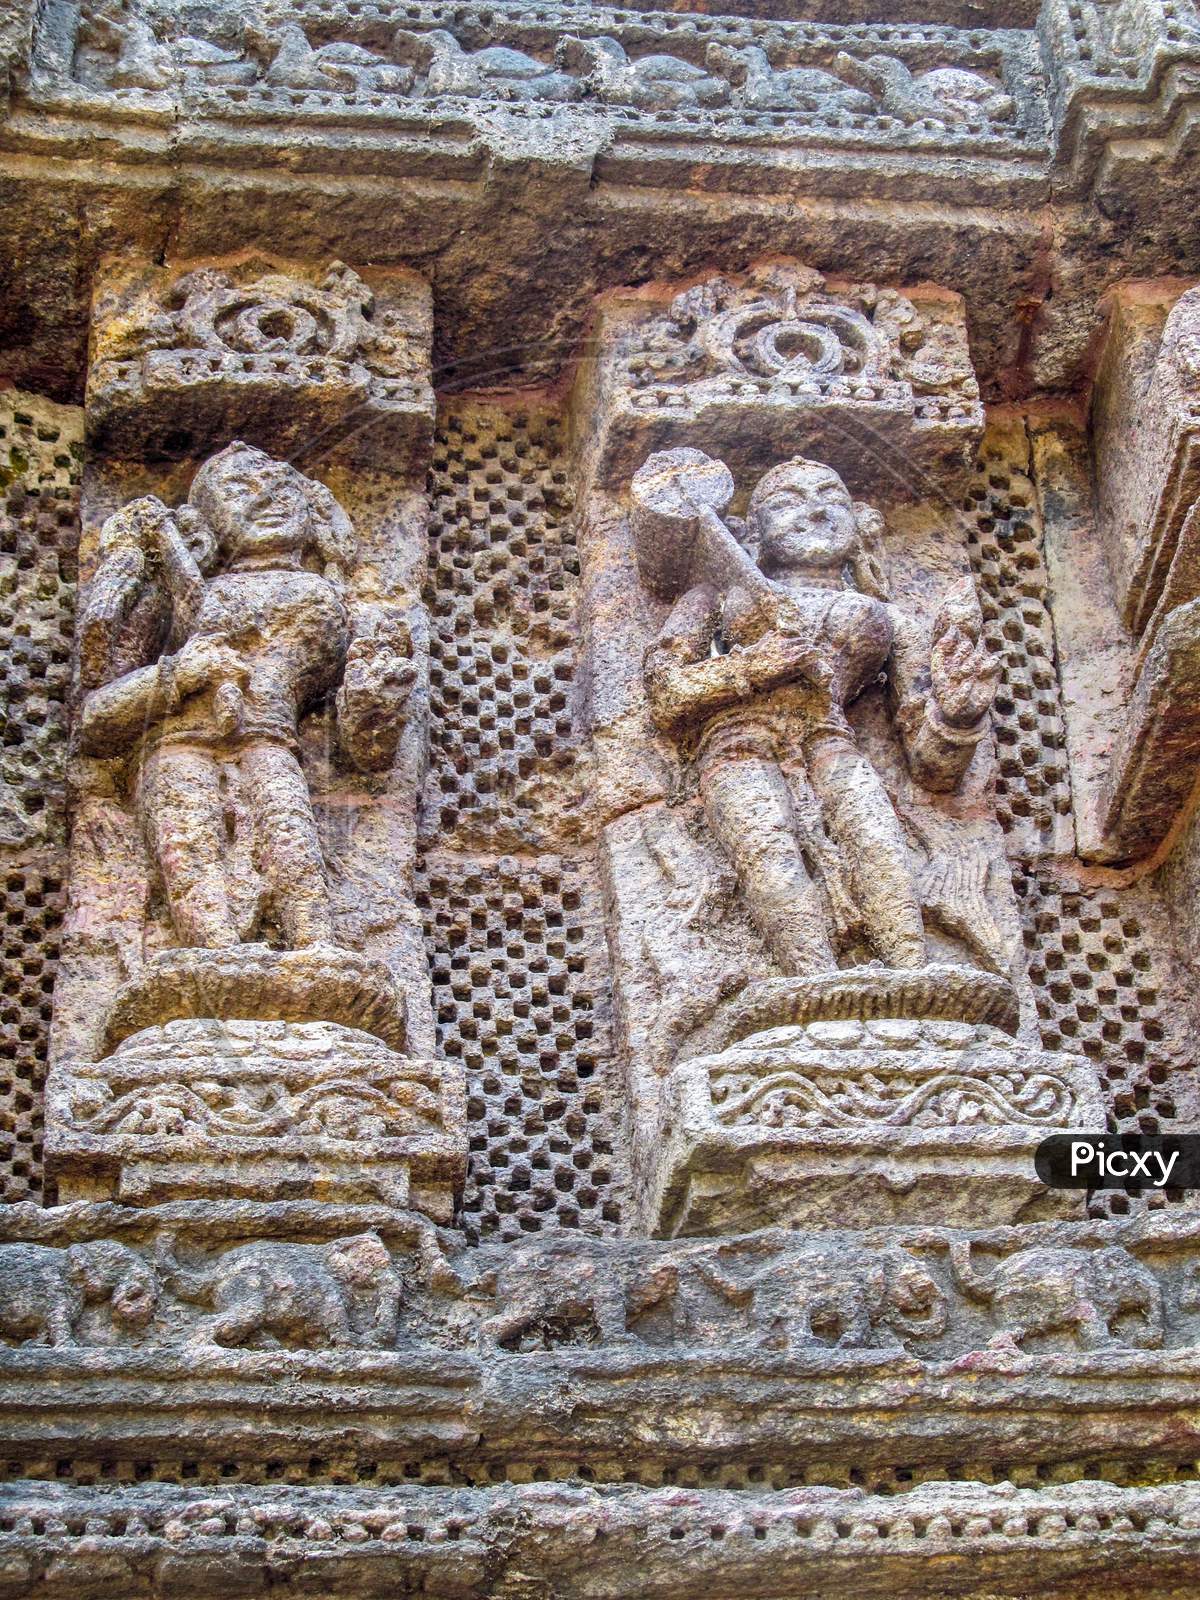 Stone carving at Konark Sun temple